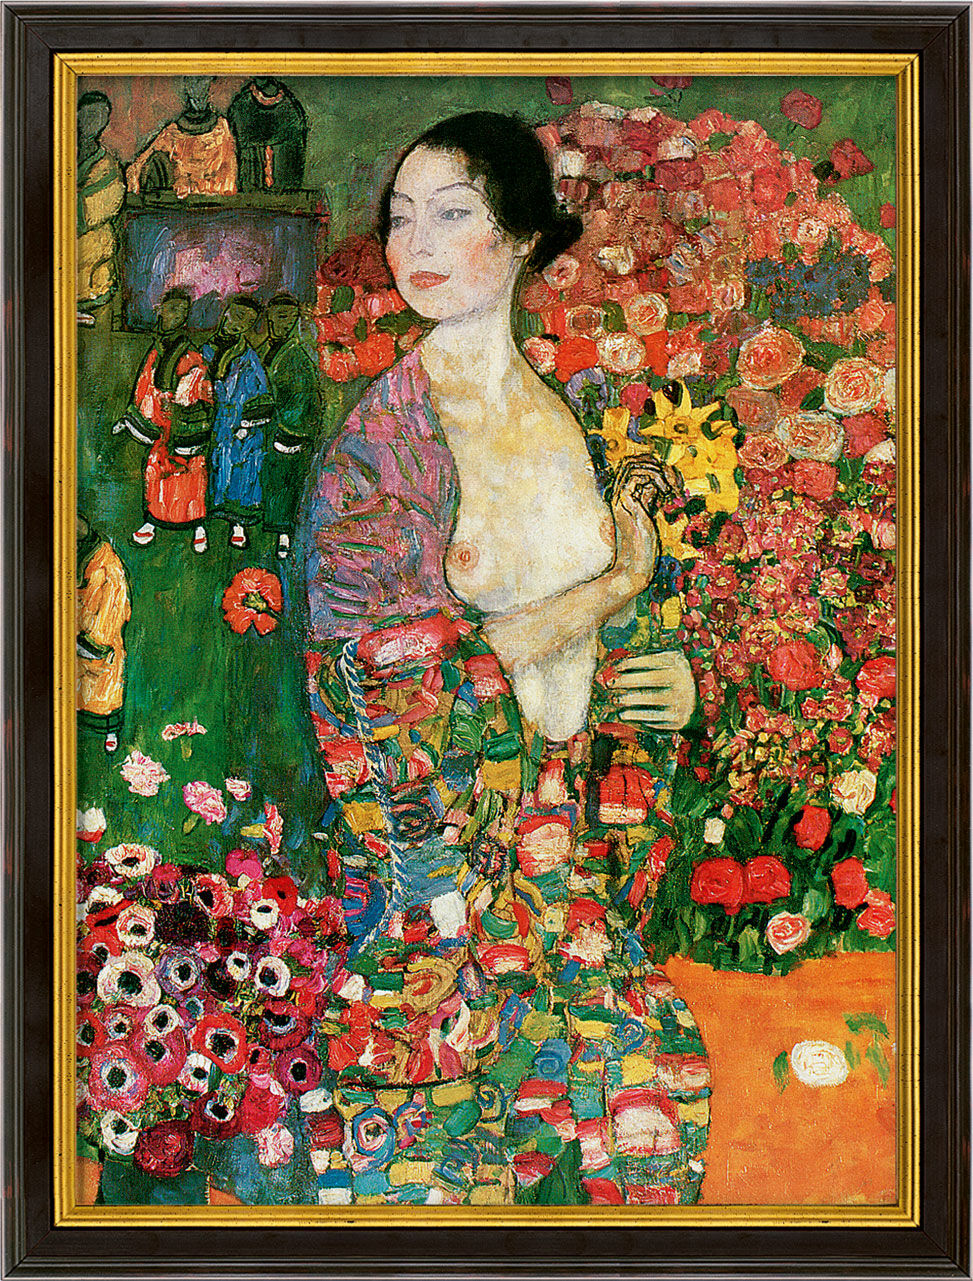 Picture "The Dancer" (1916-18), framed by Gustav Klimt